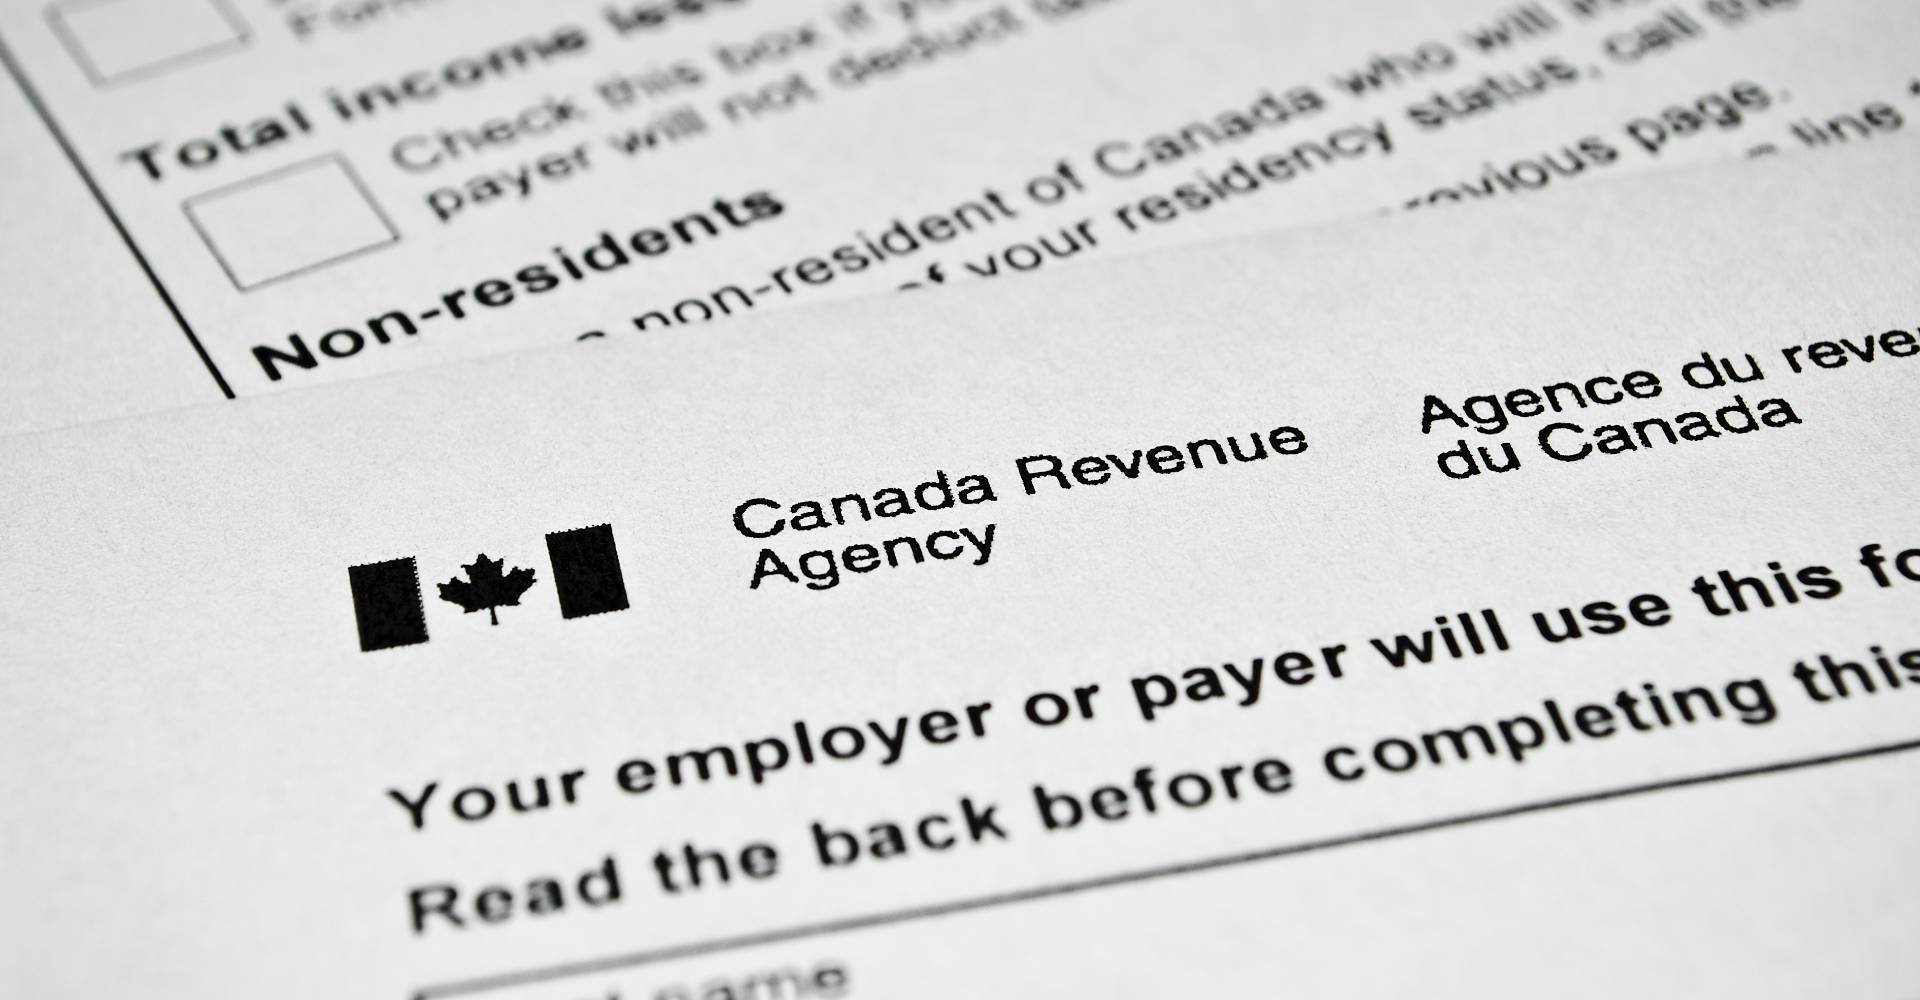 A snapshot of a Canada Revenue Agency form